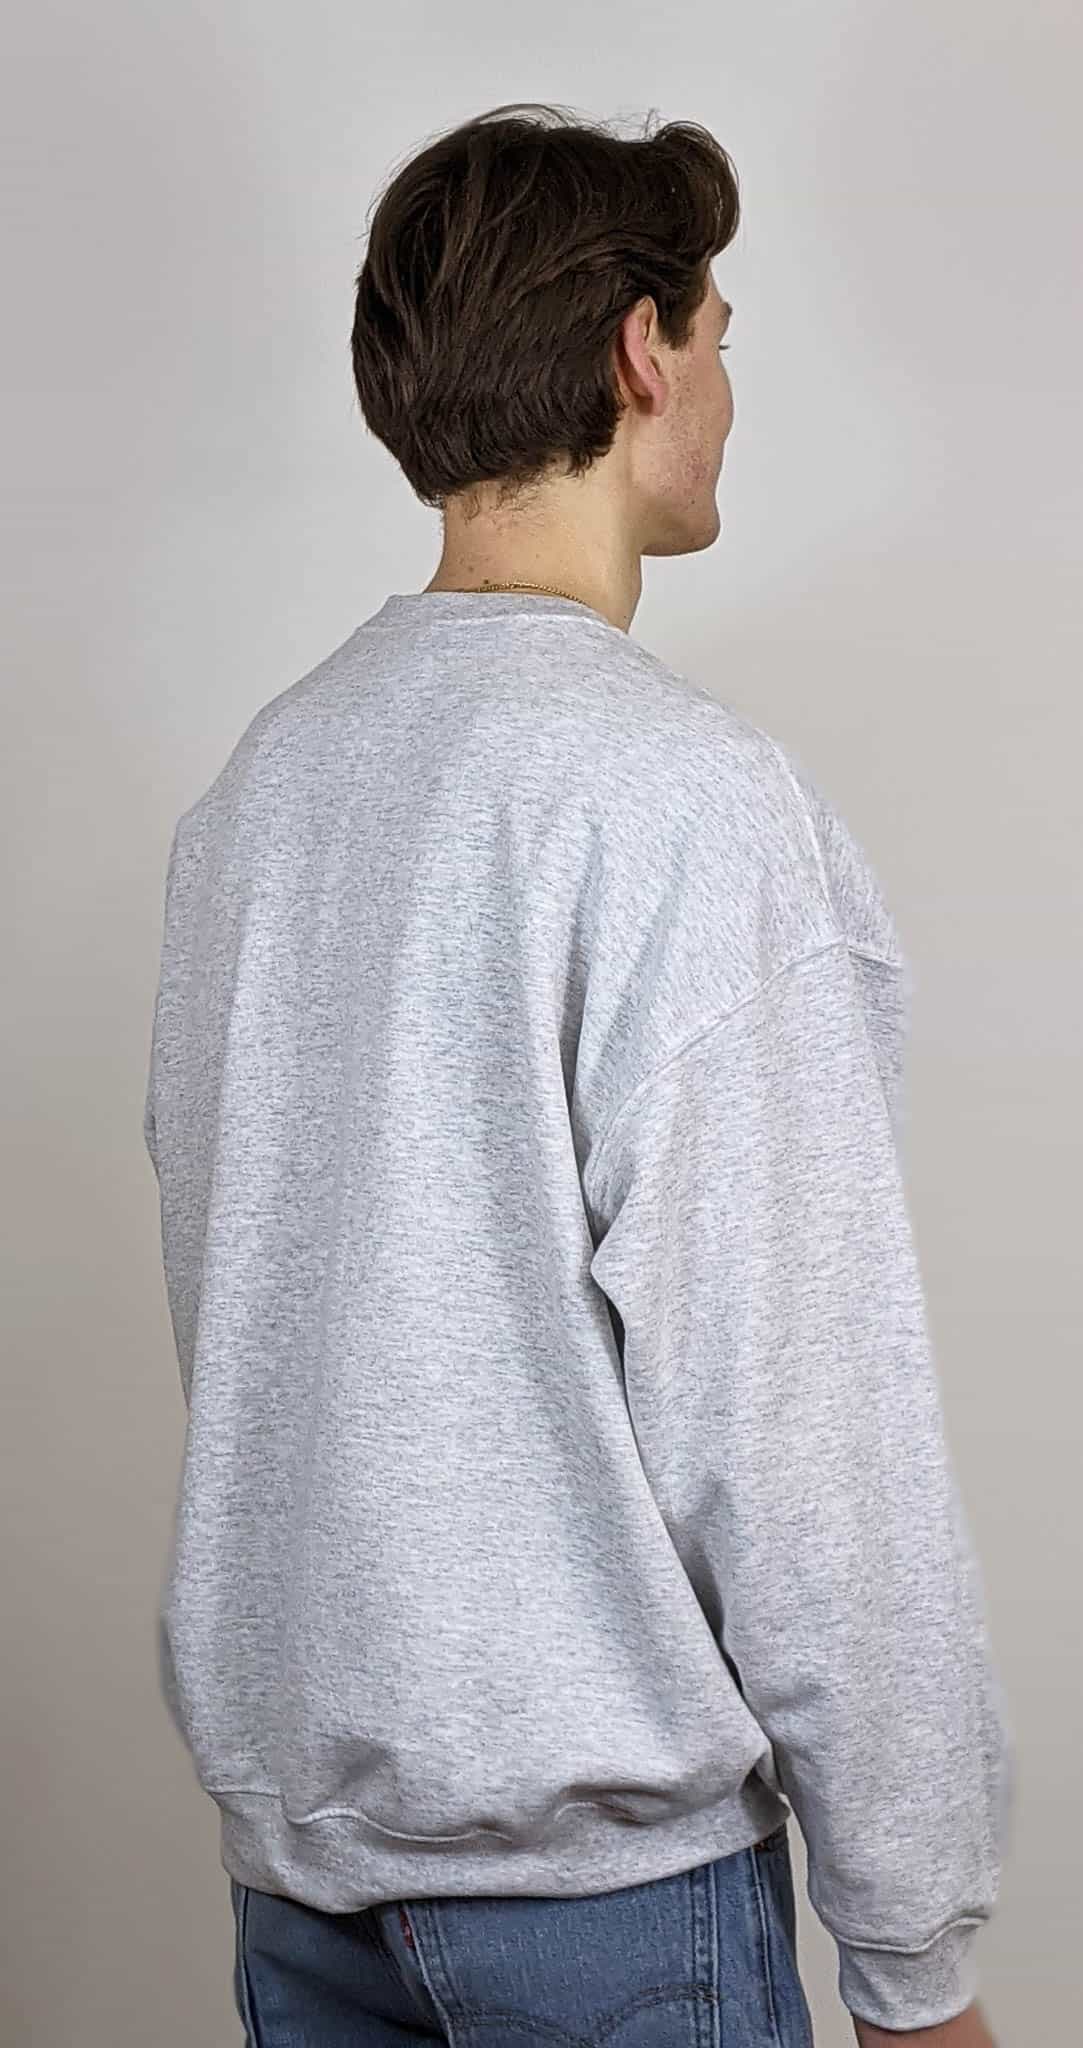 Ash Grey Gildan Sweatshirt